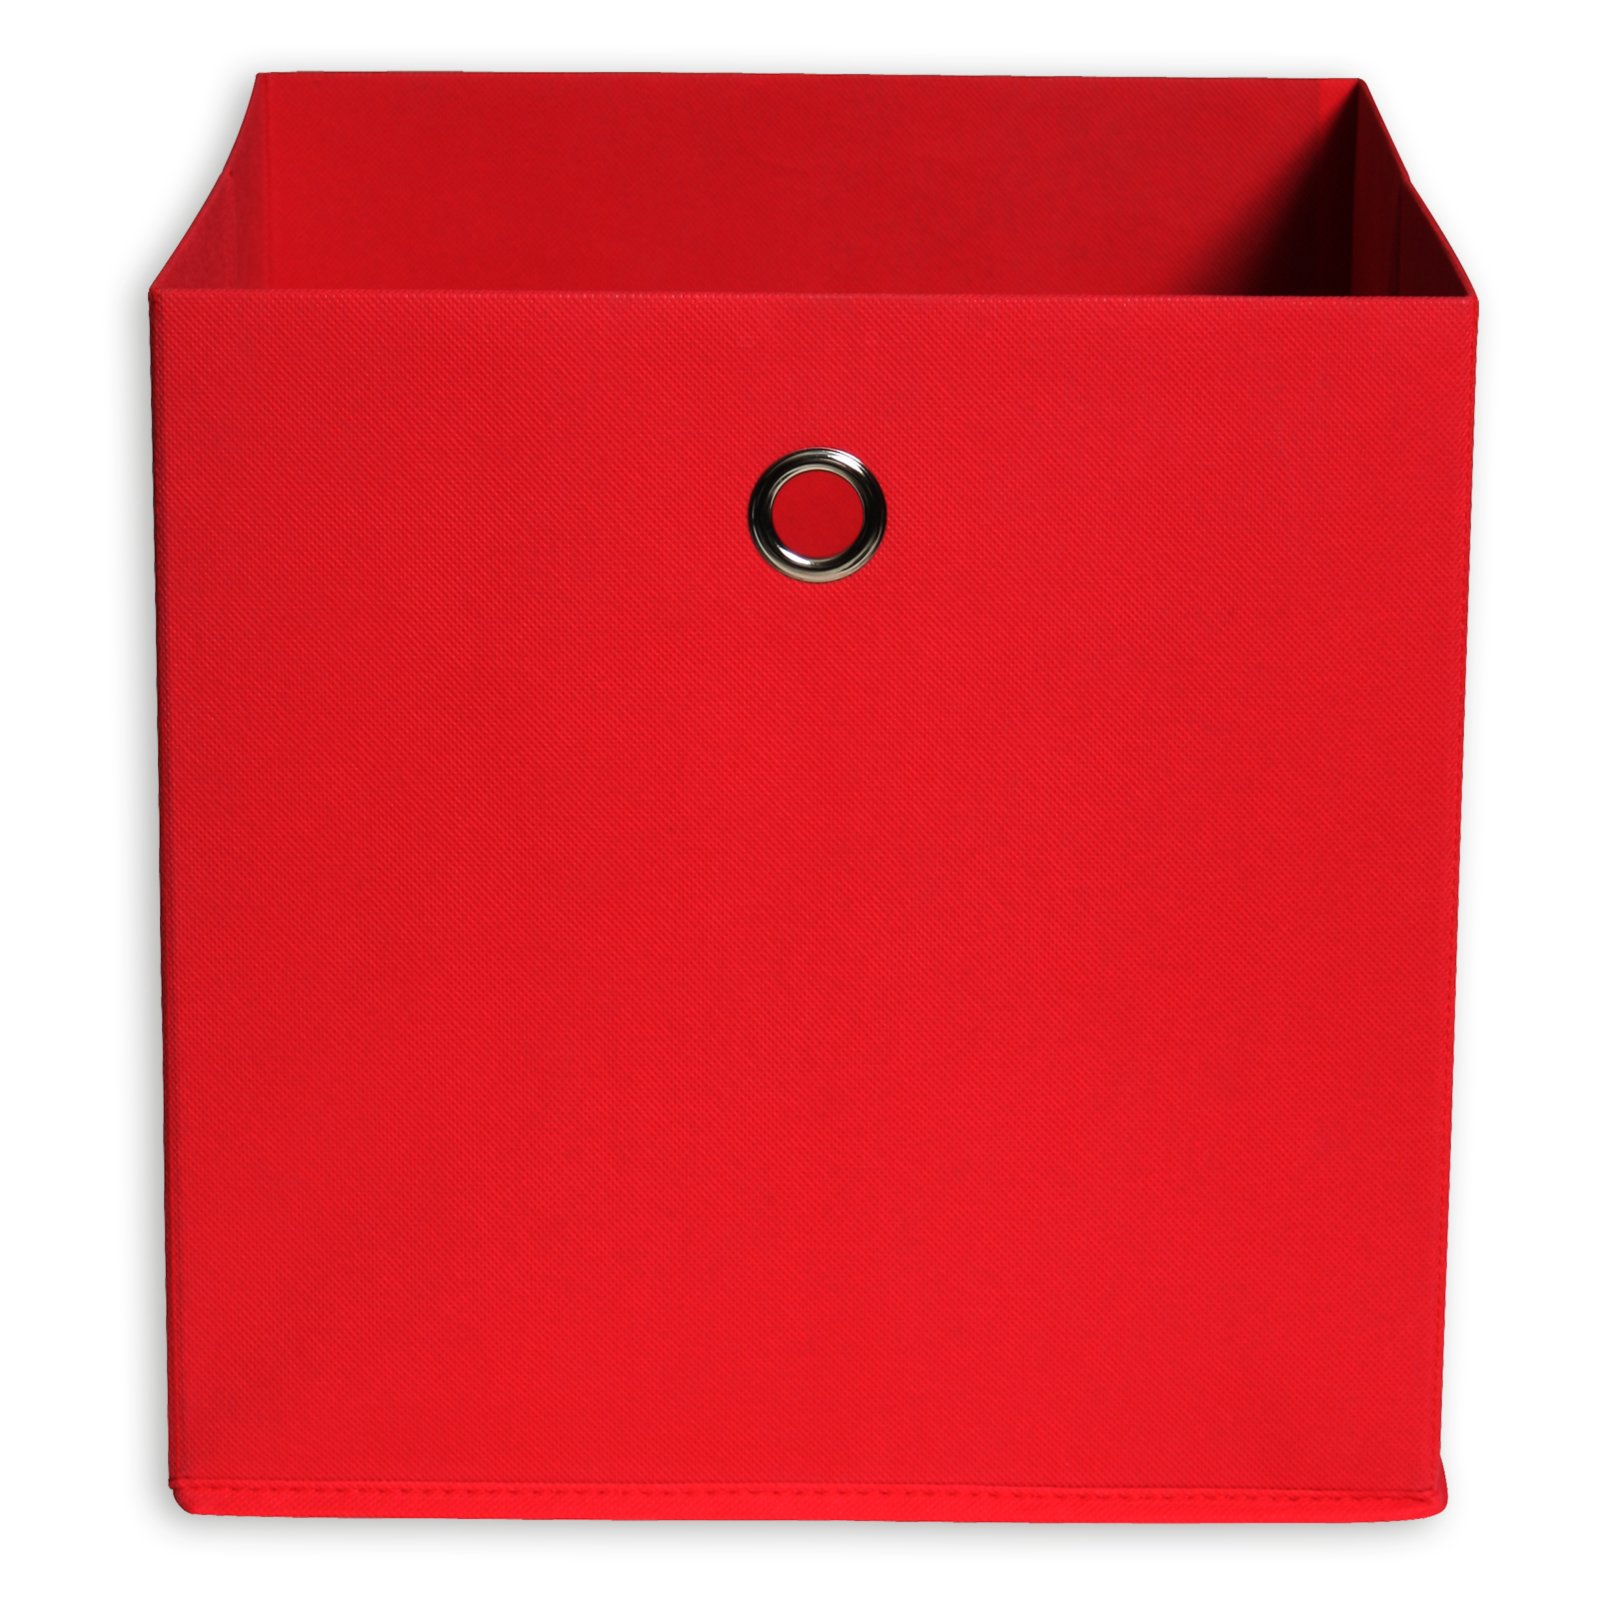 Faltbox - rot - mit Metallöse - 32x32 cm